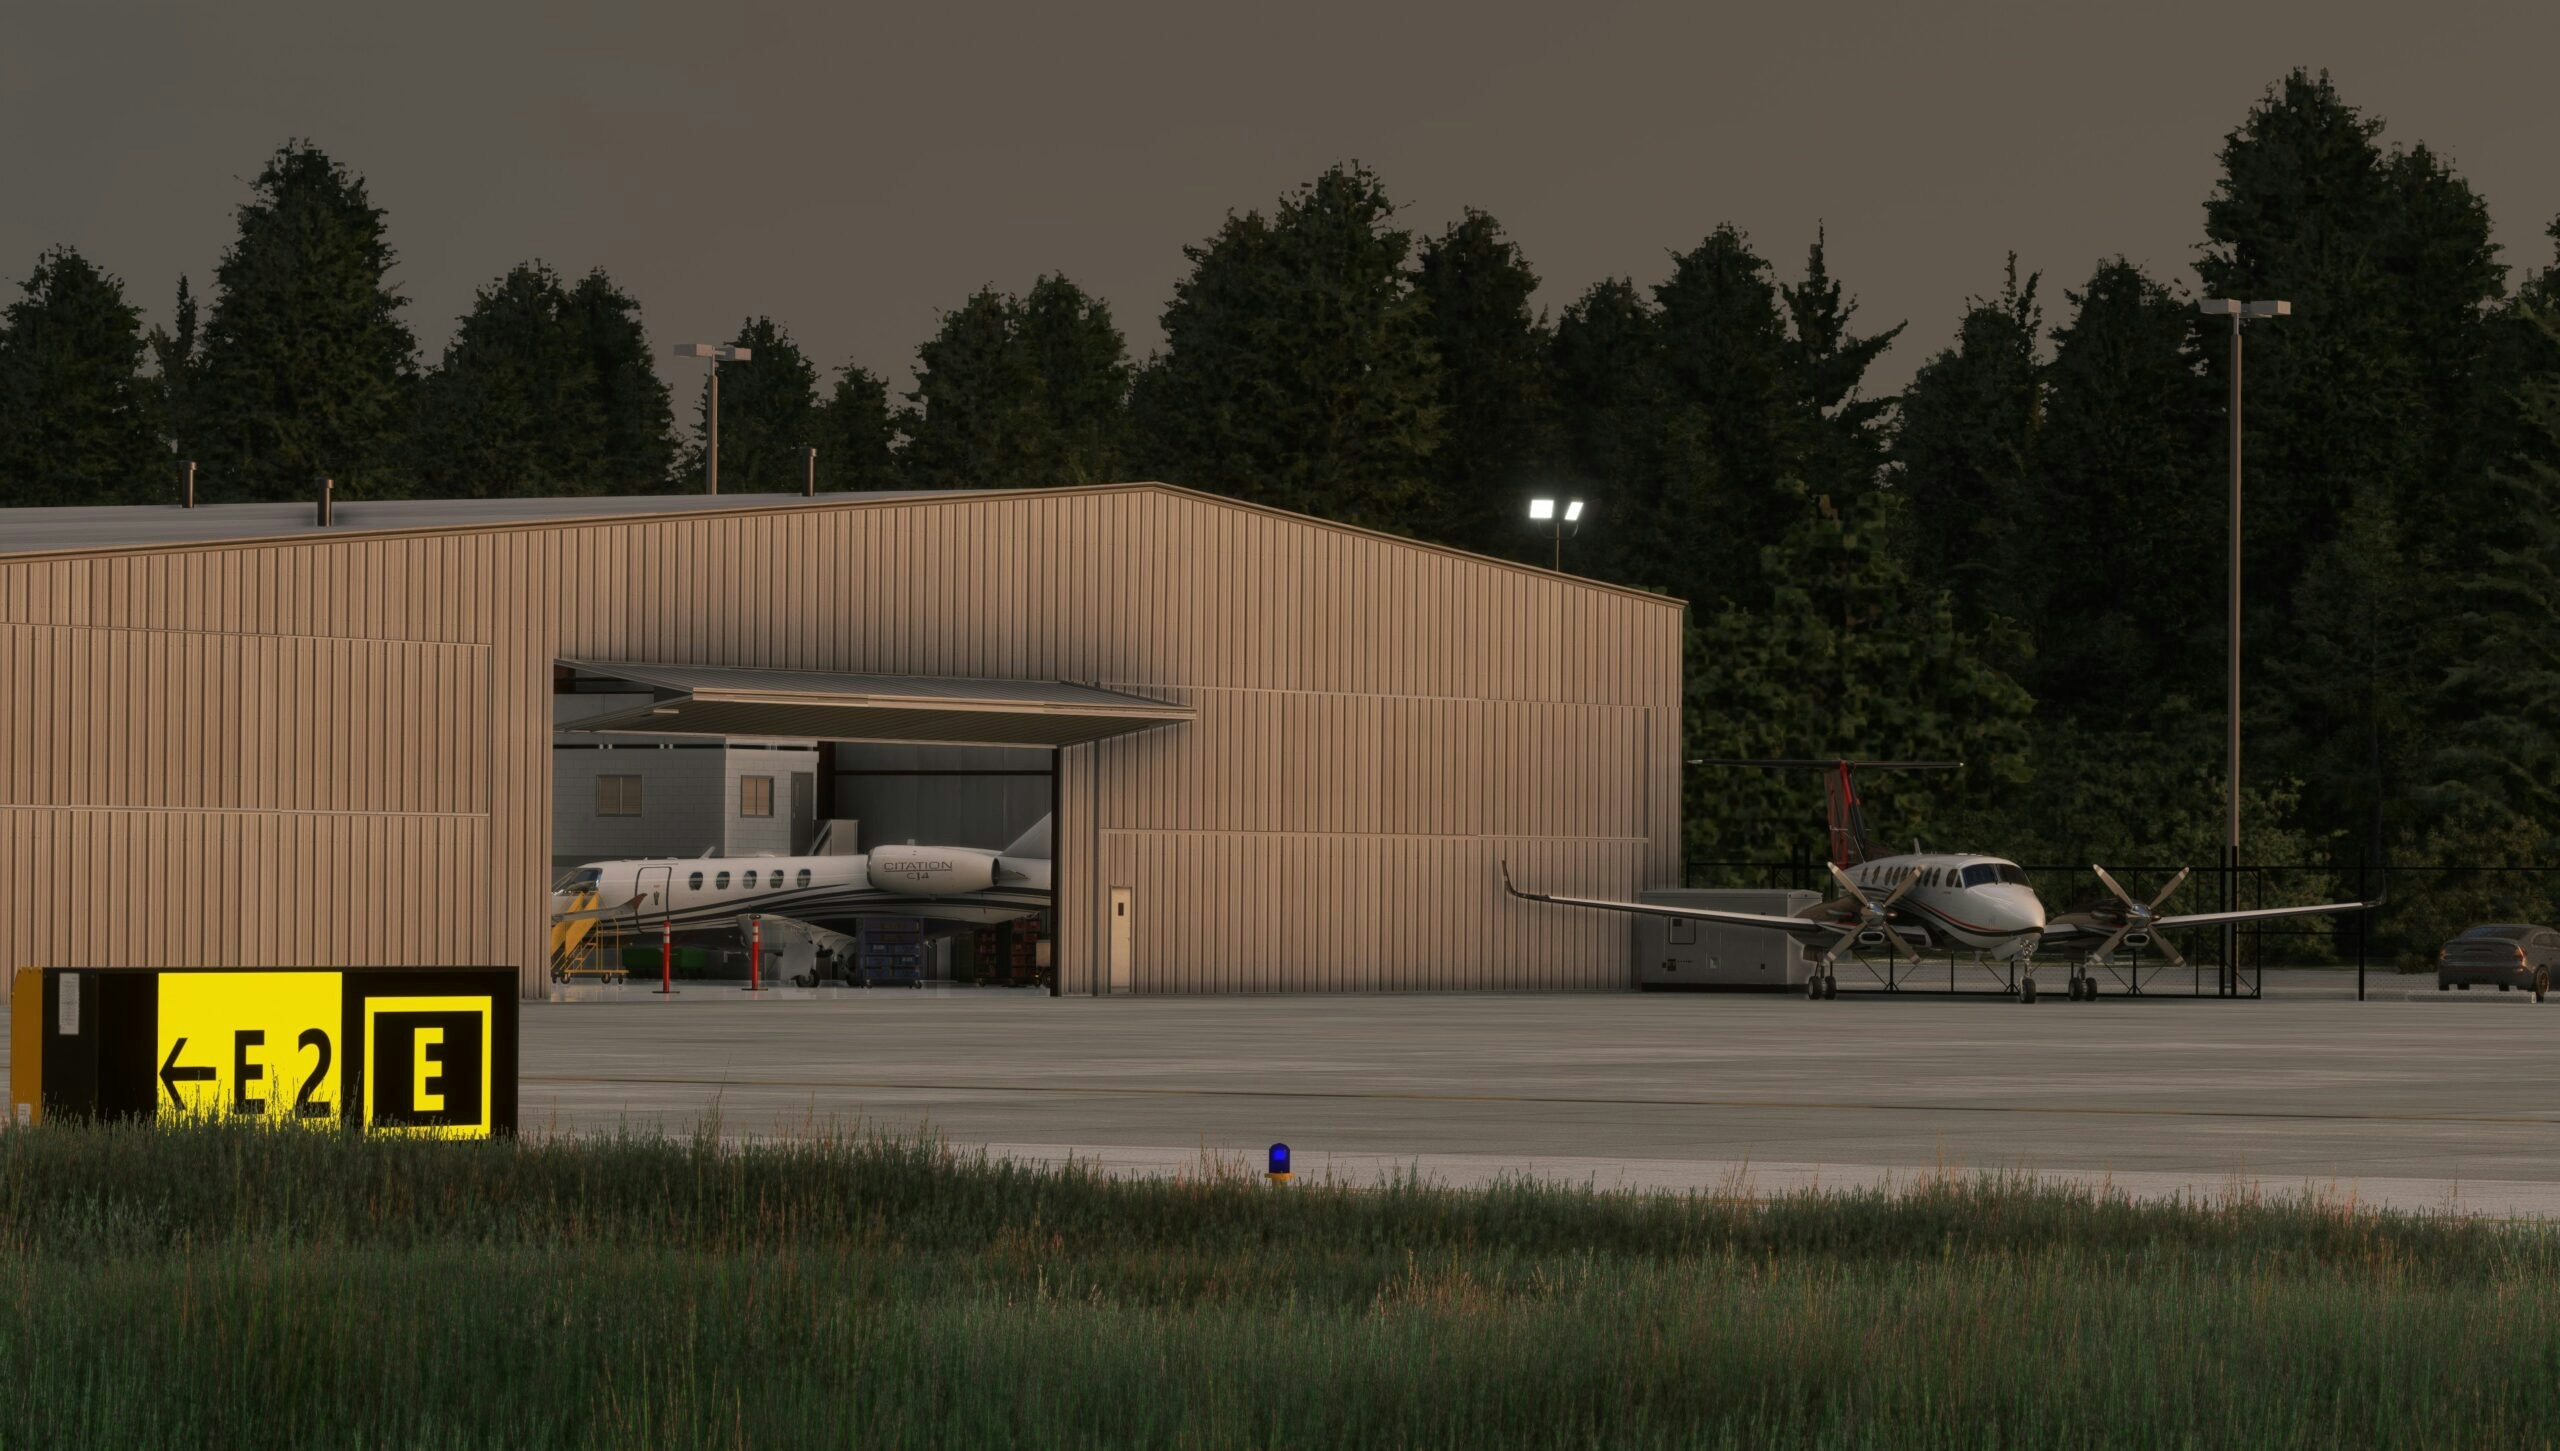 FlightFX DuPage Airport (KDPA) for MSFS 